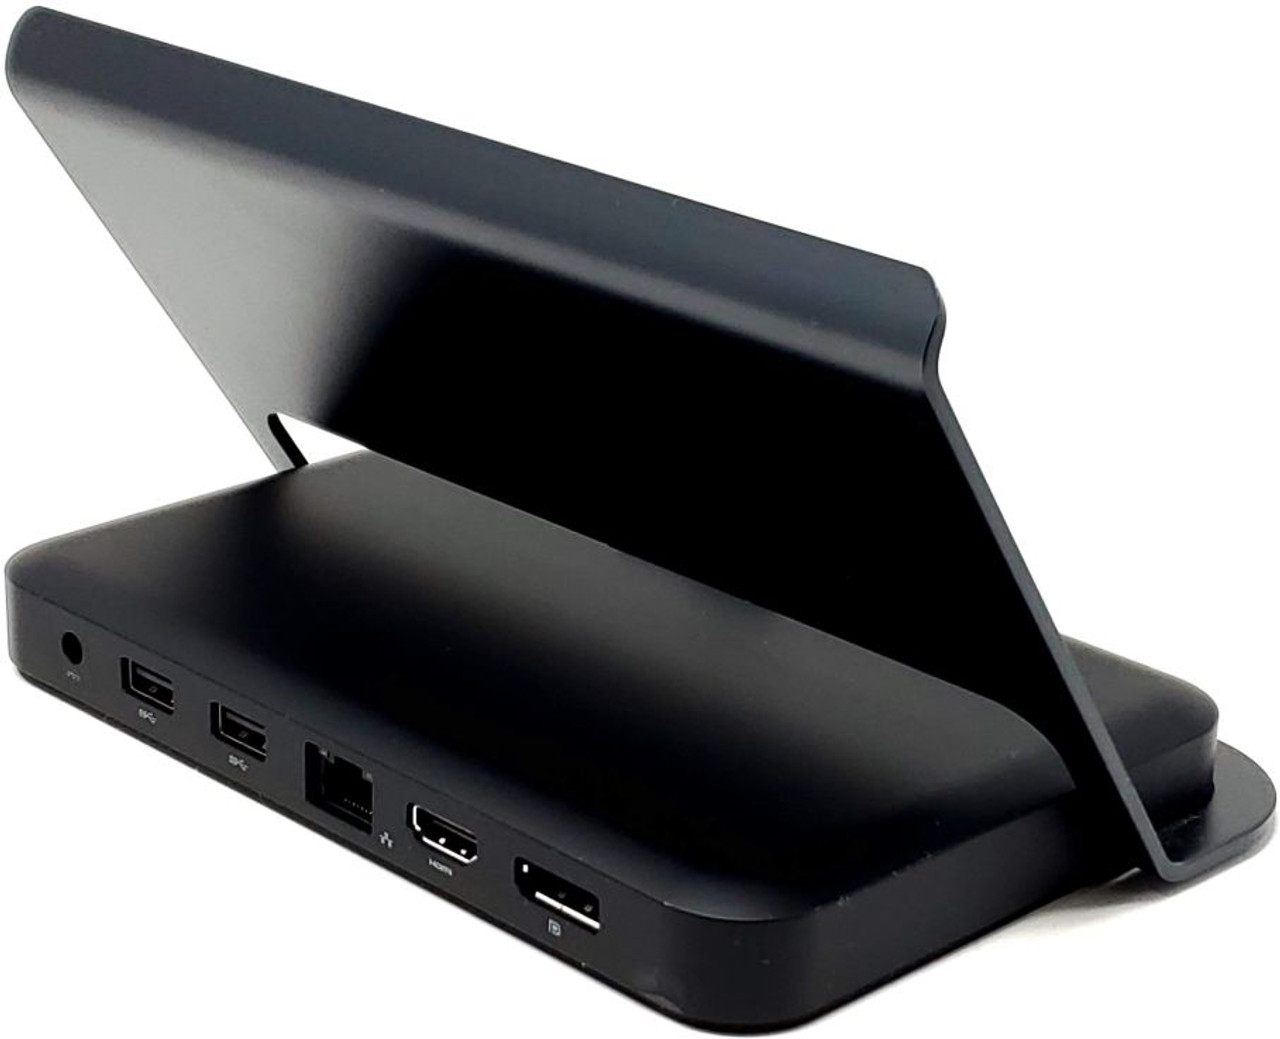 Dell 332-2364 - K10A Docking Station Tablet Dock for Dell Venue 11 Pro